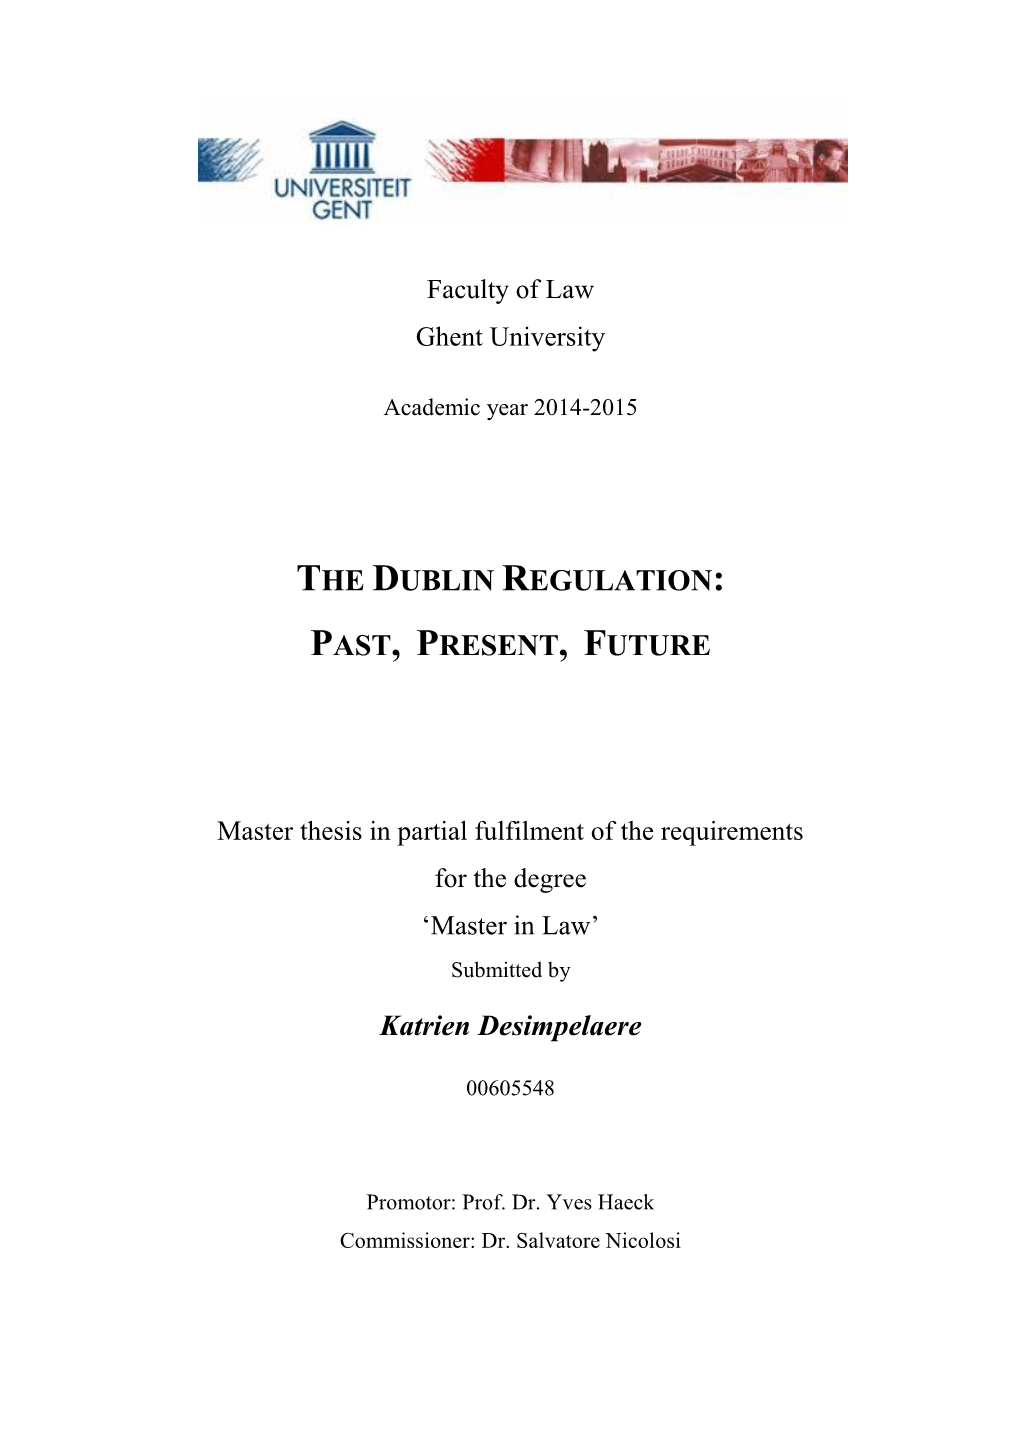 The Dublin Regulation